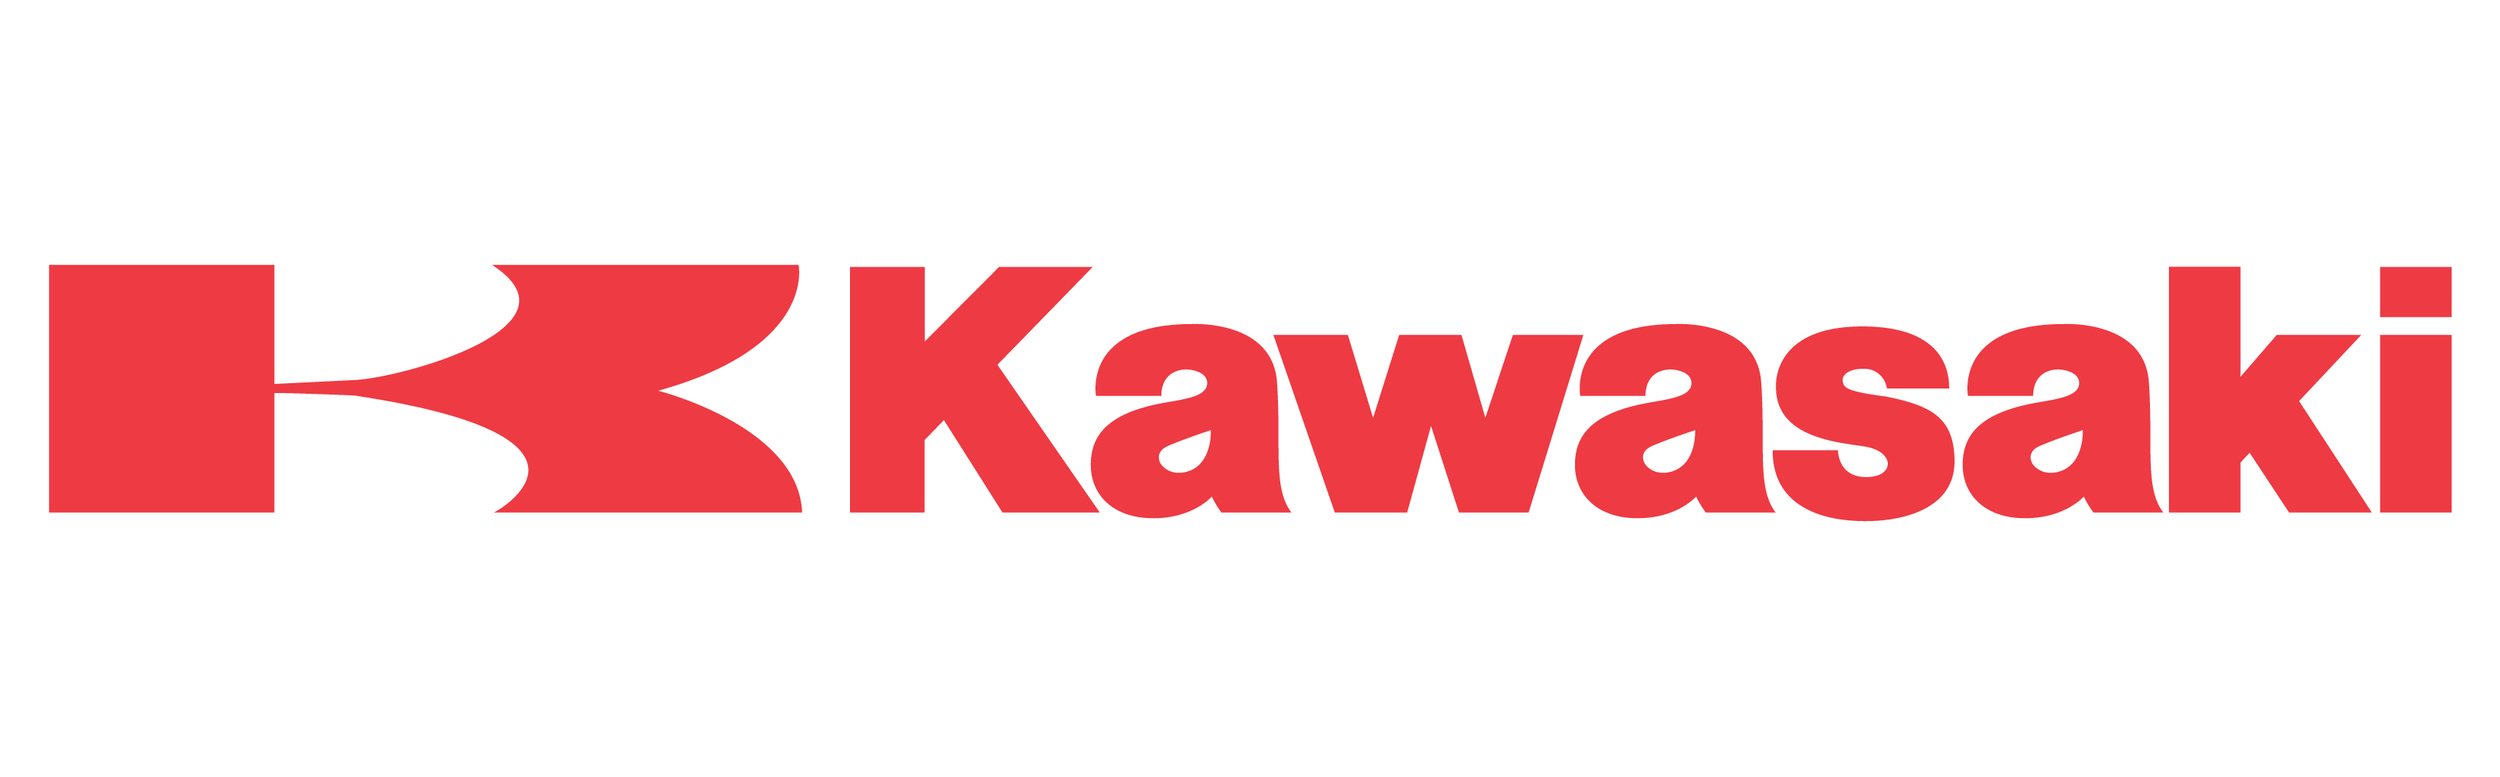 k-kawasakired-logo-11.jpg